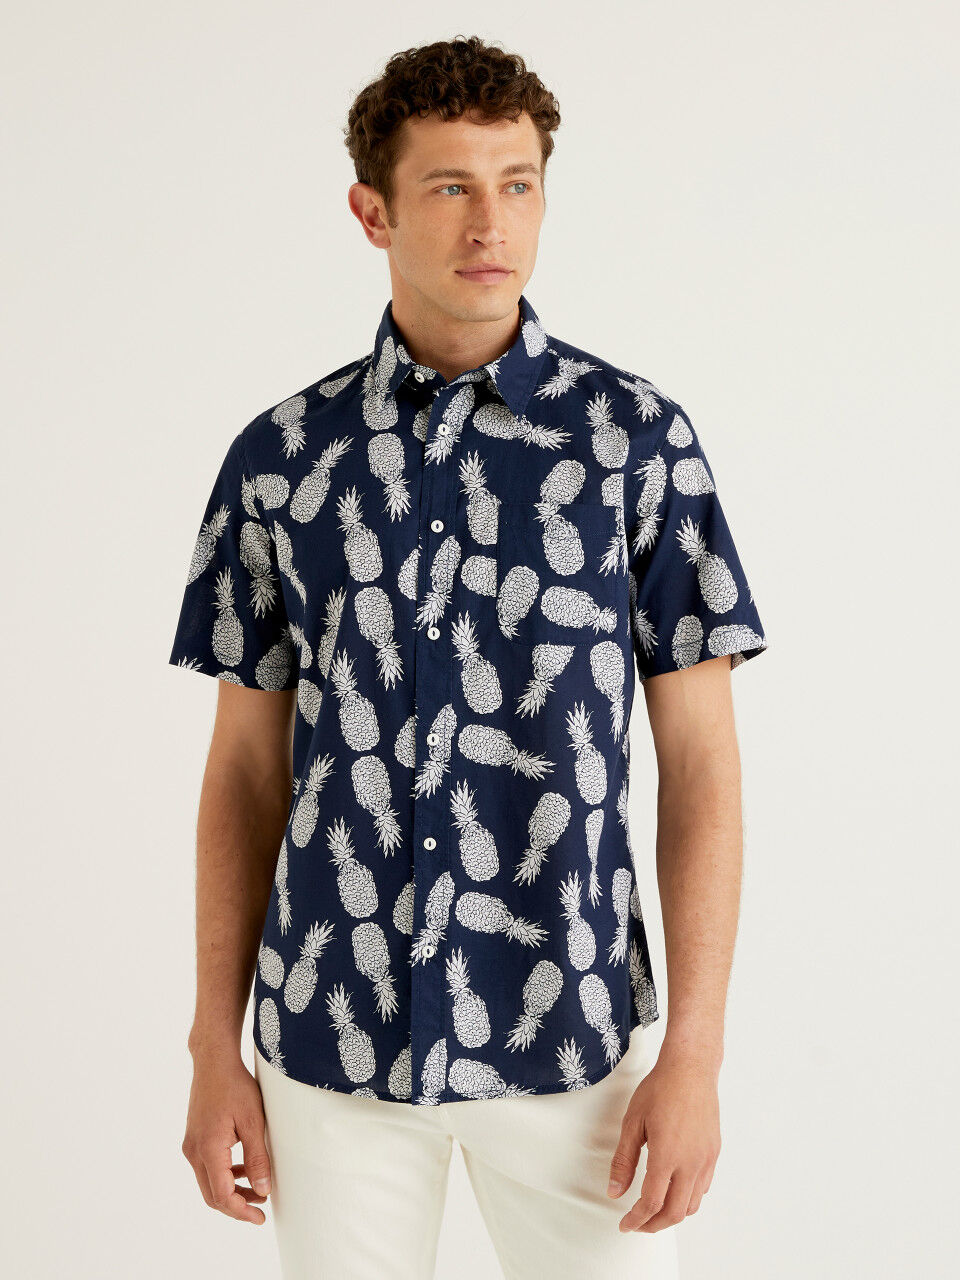 Short sleeve patterned shirt